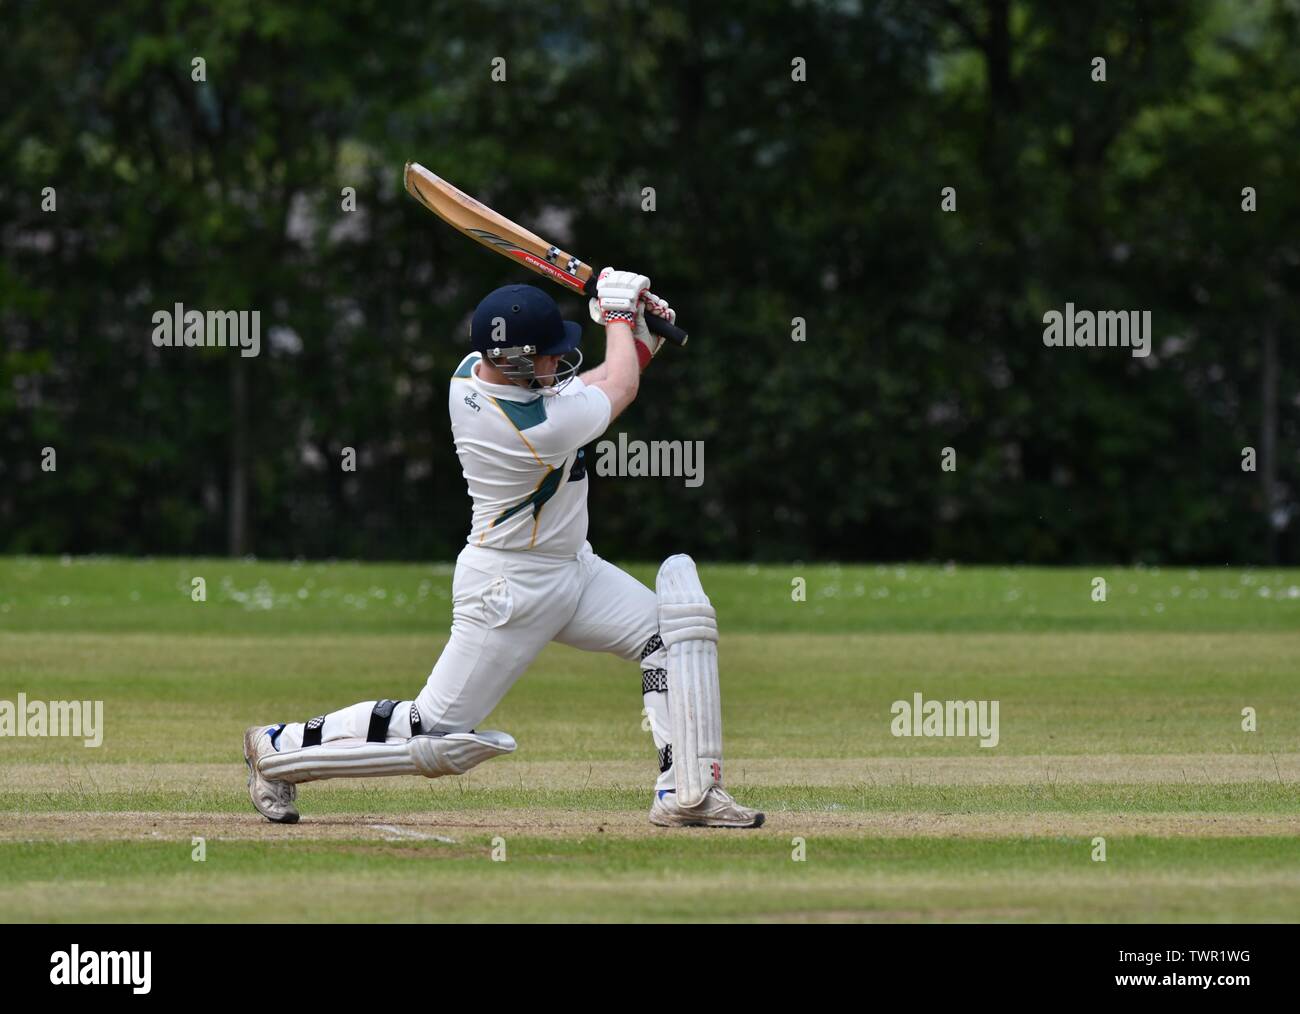 Stalybridge St Paul's batsman in action in the match against Hadfield St Andrew's. Stock Photo